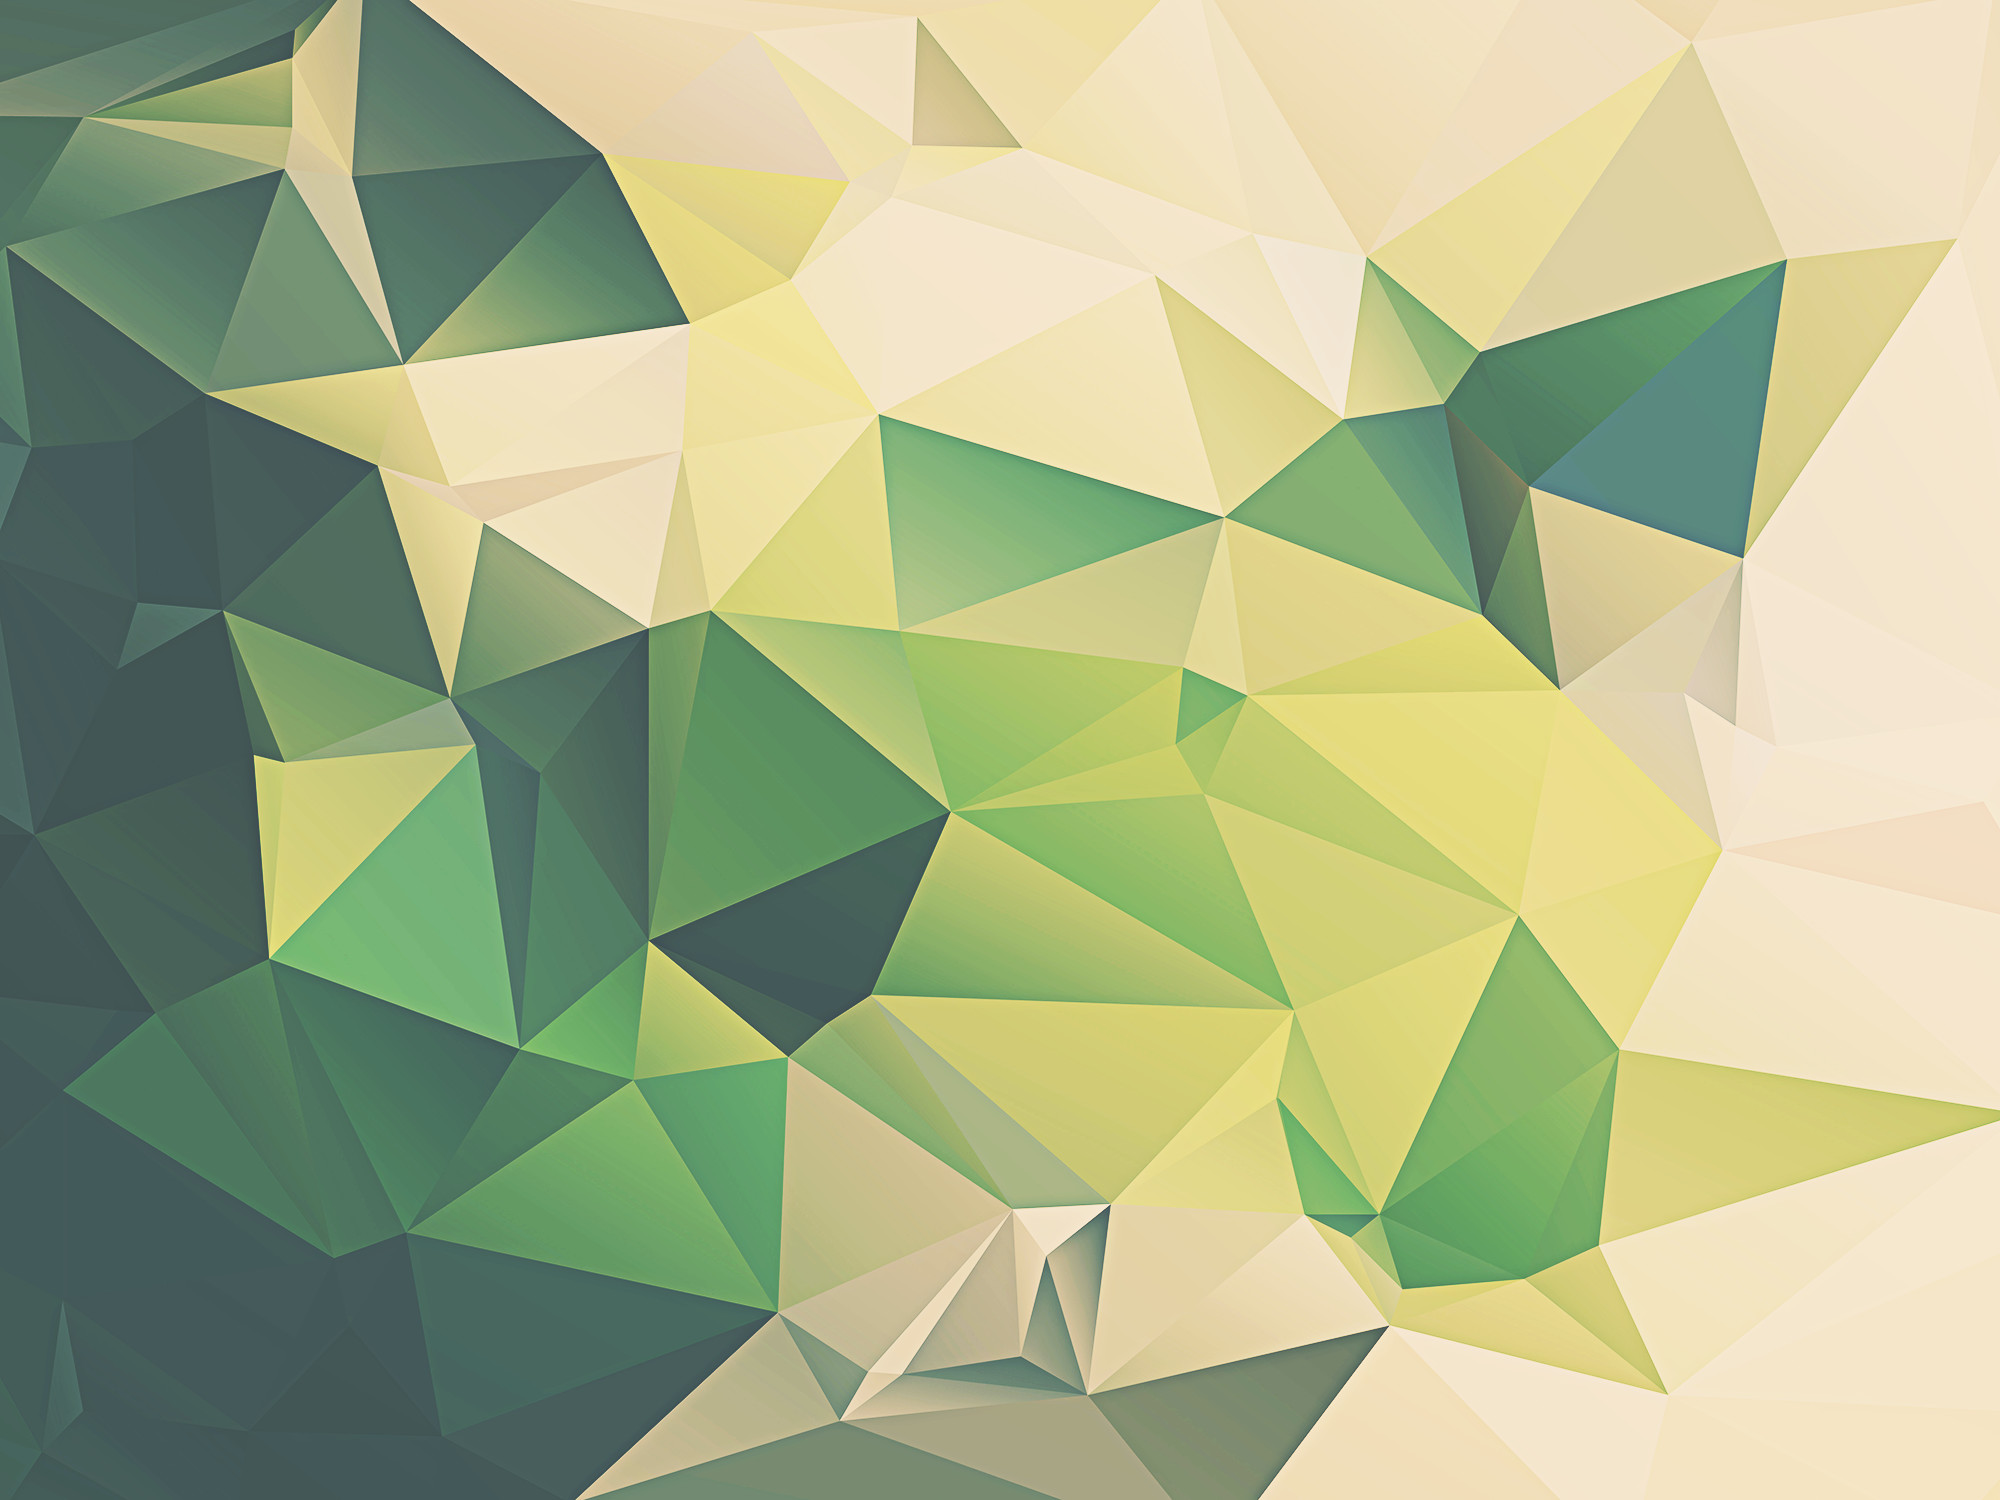 2000x1500 Desktop Images of Geometric Green: 26/03/2015 by Bruna Kennemer